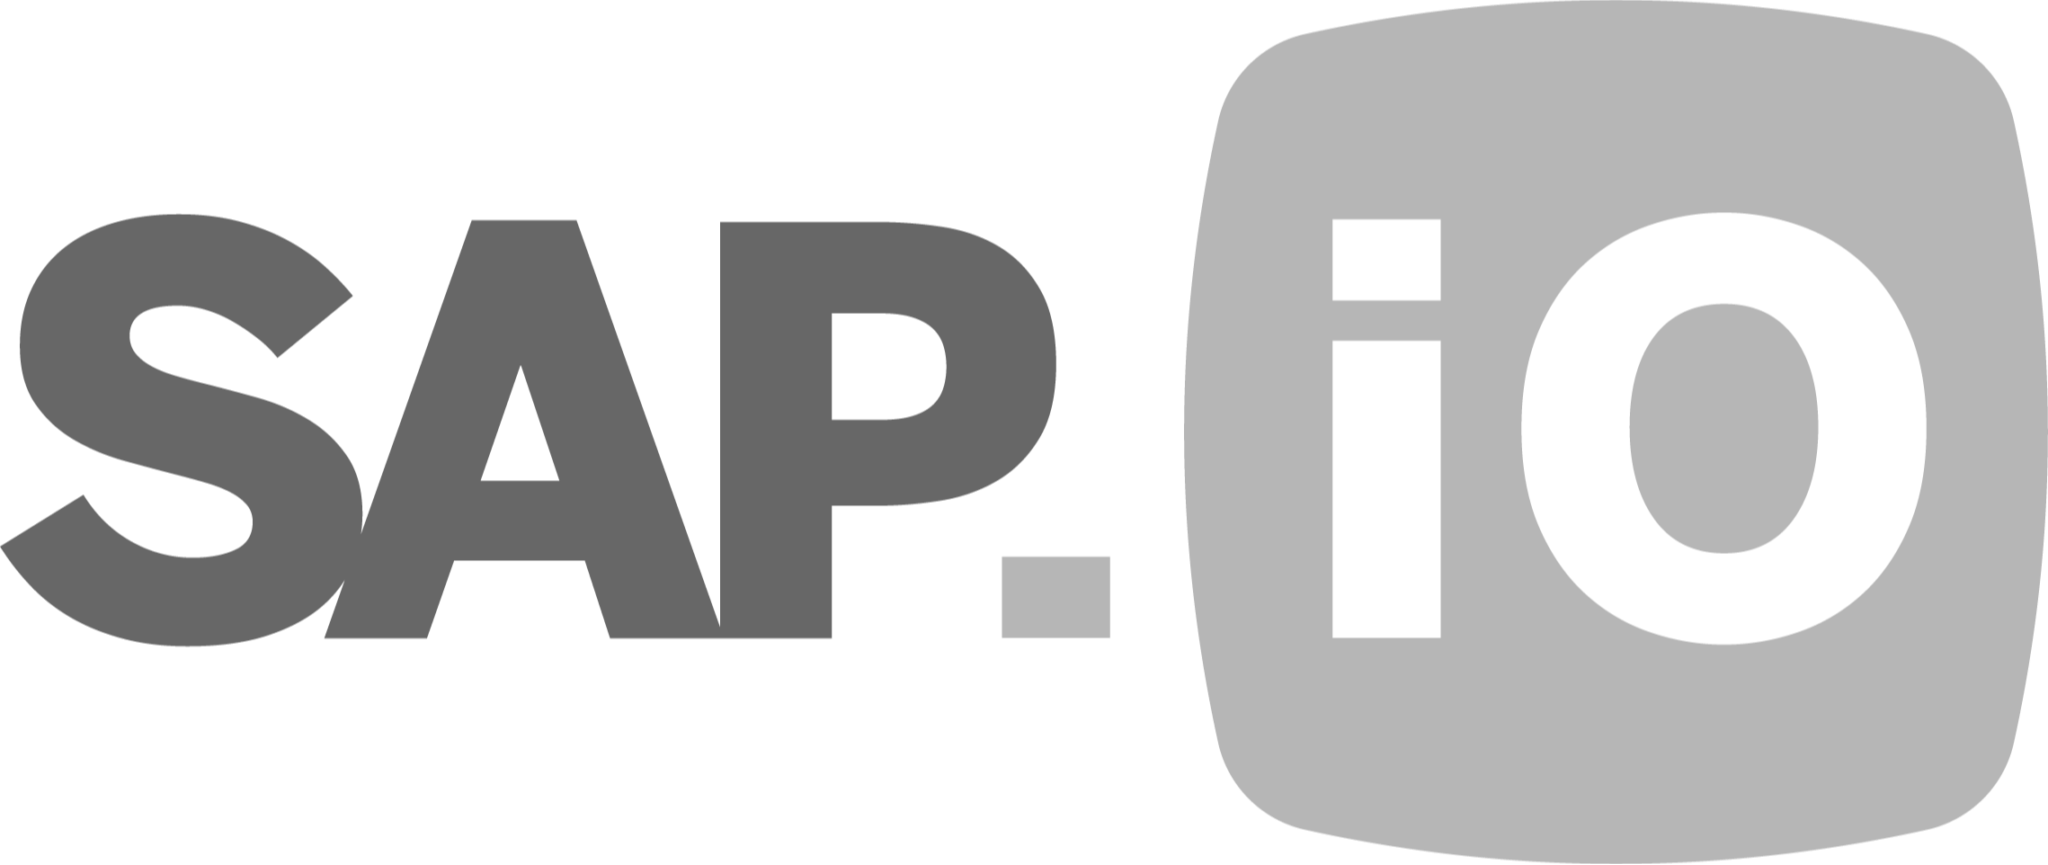 Sap logo product page